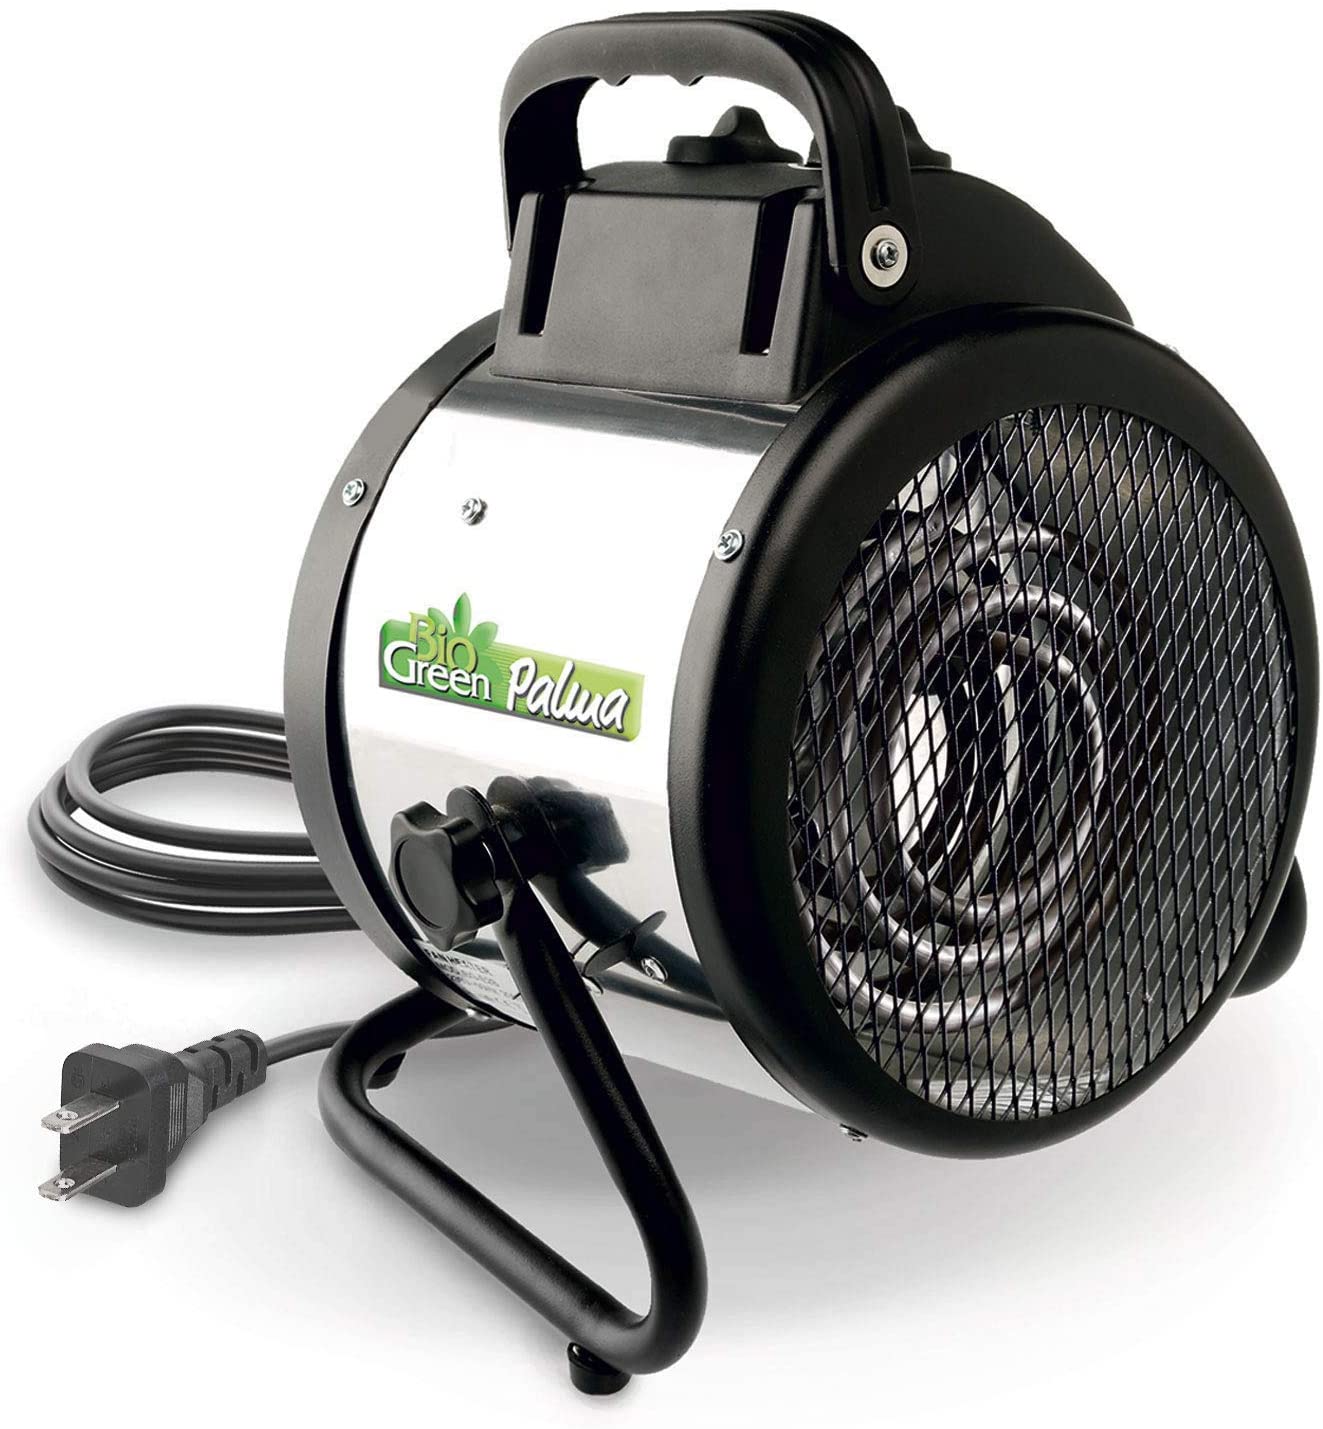 Bio Green Electric Fan Heater for Greenhouses